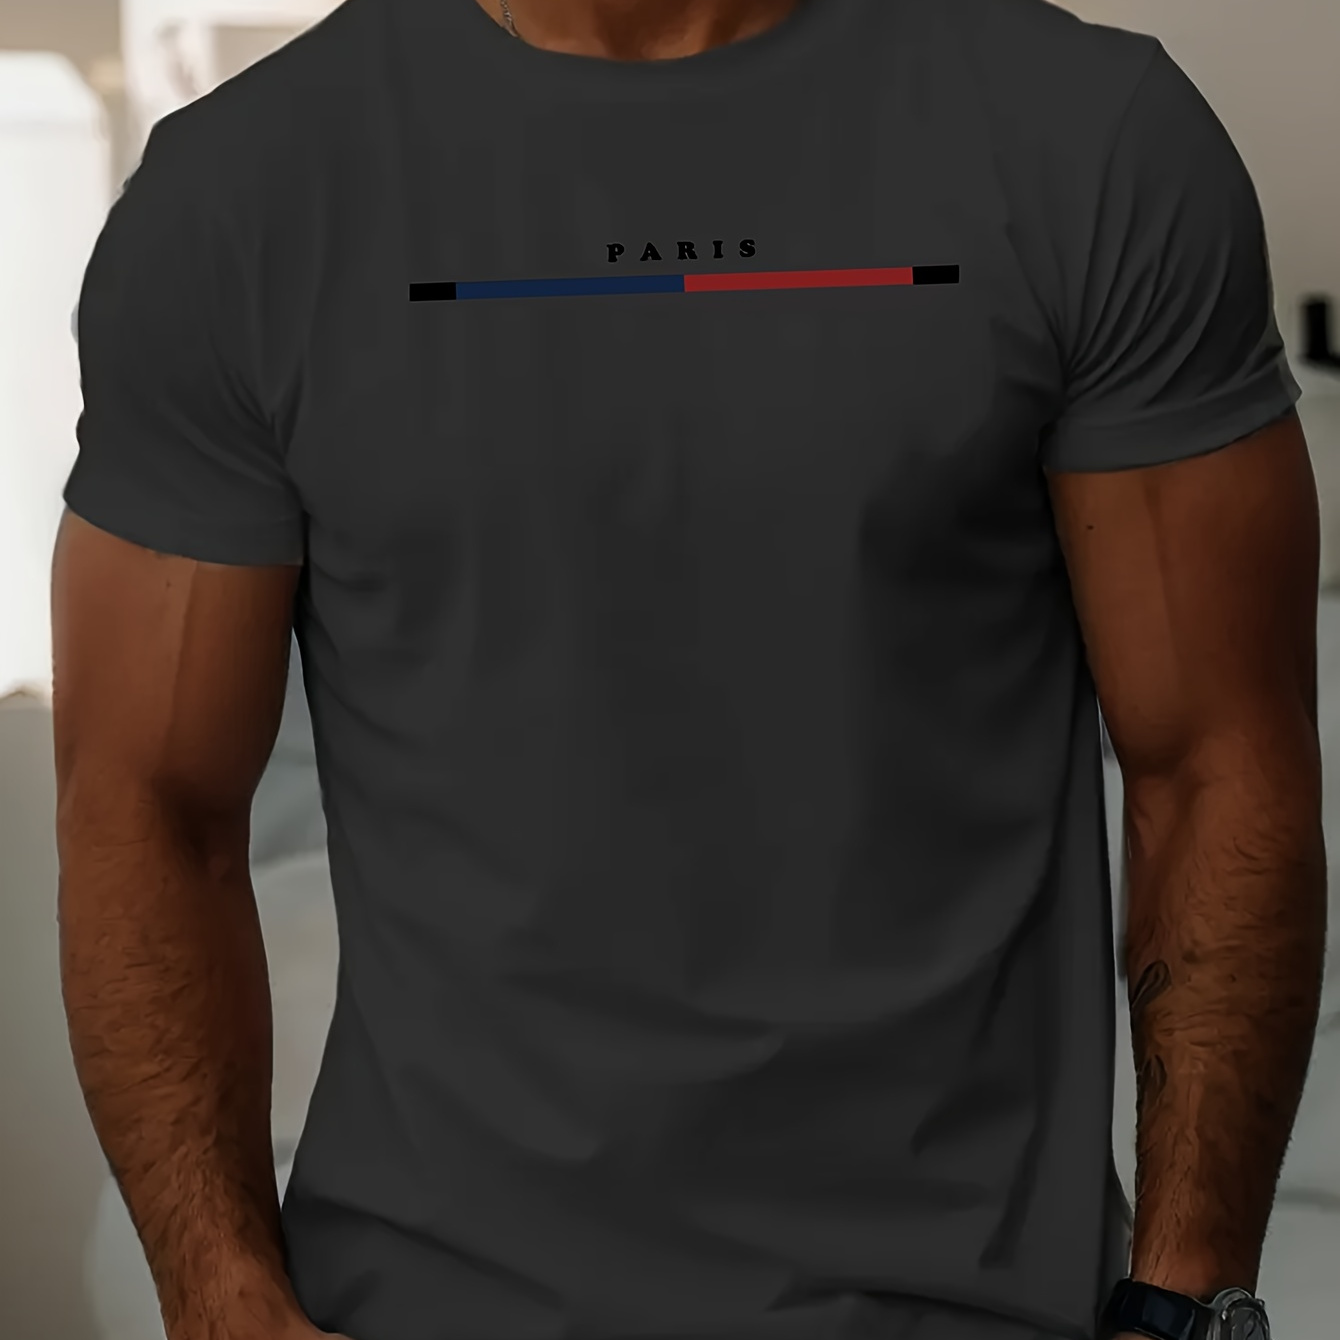 

Paris Print T Shirt, Tees For Men, Casual Short Sleeve T-shirt For Summer